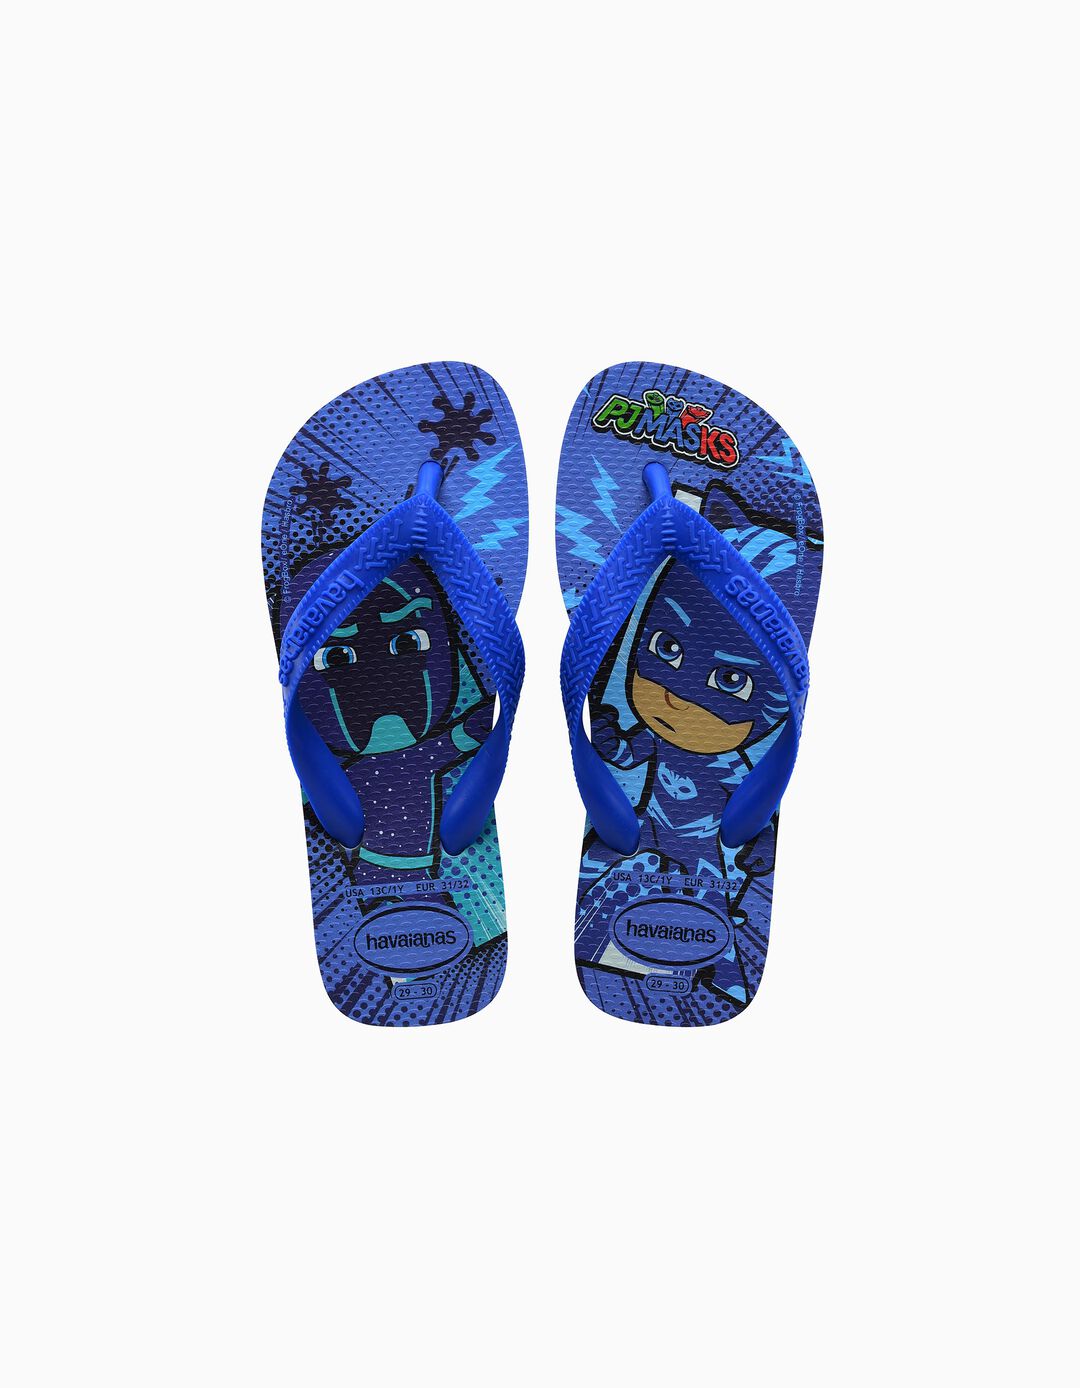 Chinelos de Praia 'Havaianas' 'PJ Masks', Menino, Azul